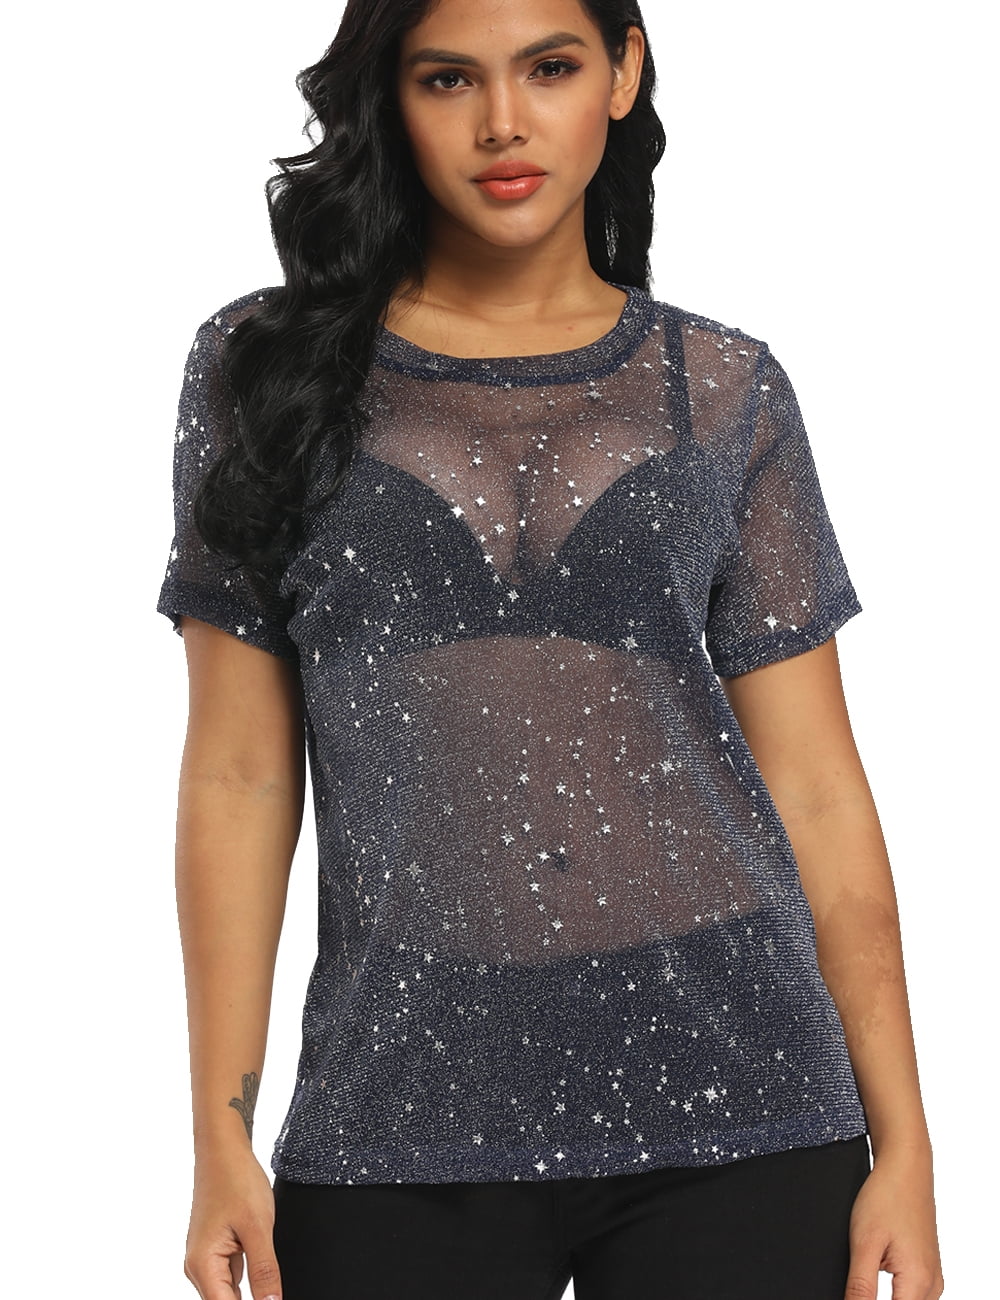 Dilgul Women S Star Mesh See Through Mock Neck Long Sleeve Tops Tee T Shirt 2xl